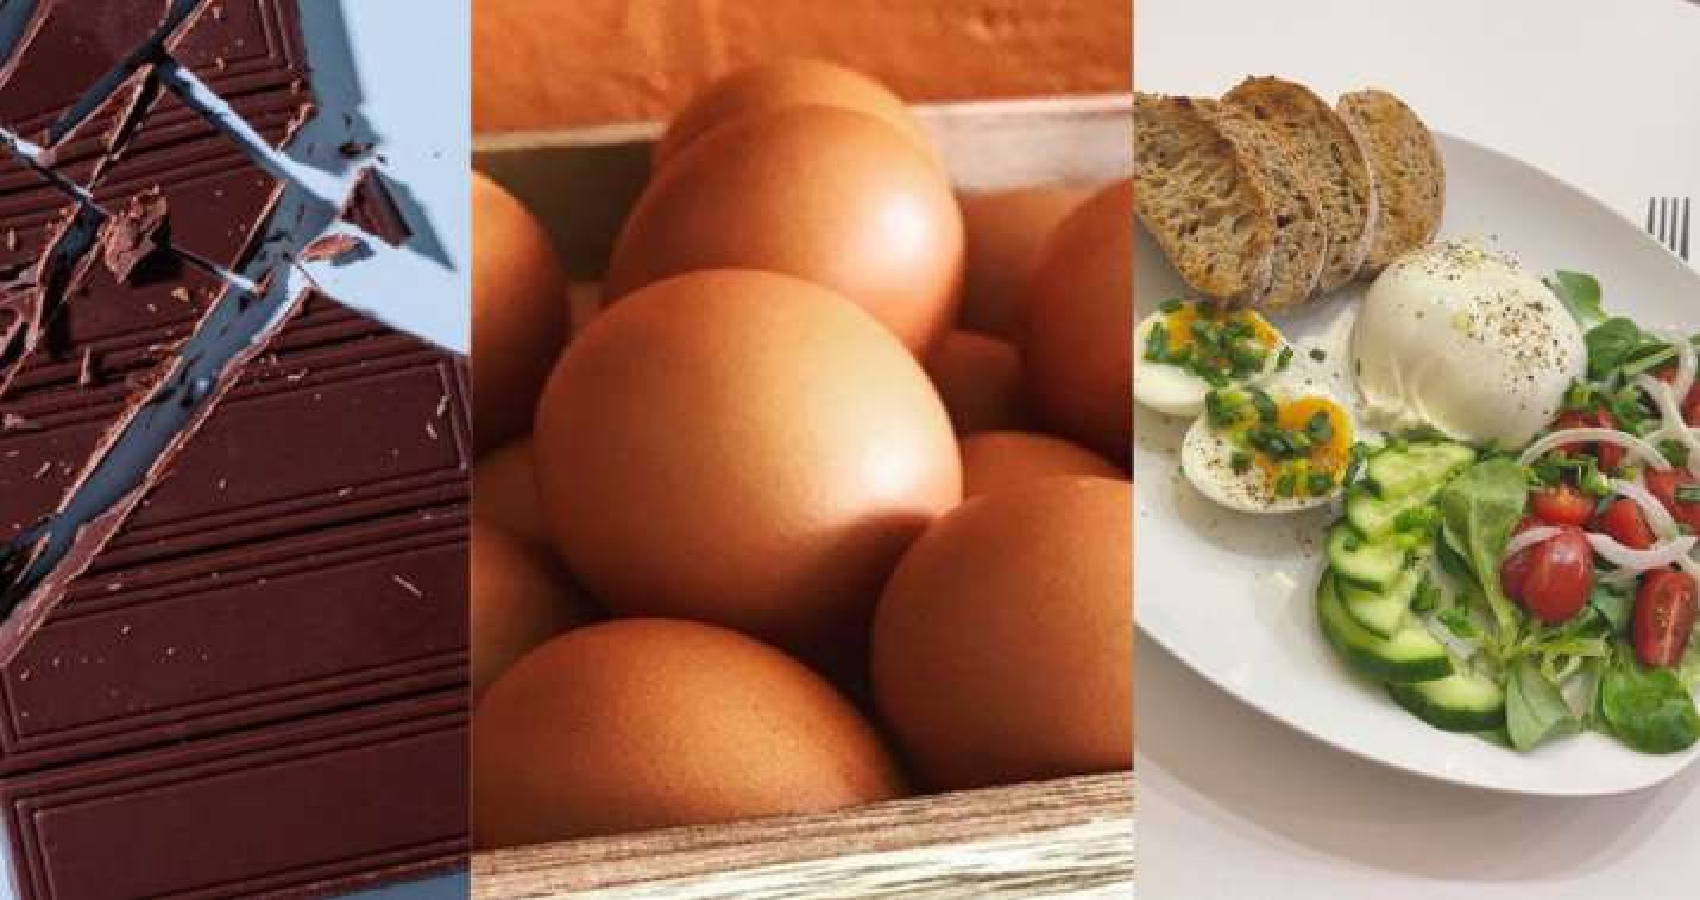 Dark Chocolate, Fish, Eggs, Yoga To Build Immunity Against Covid